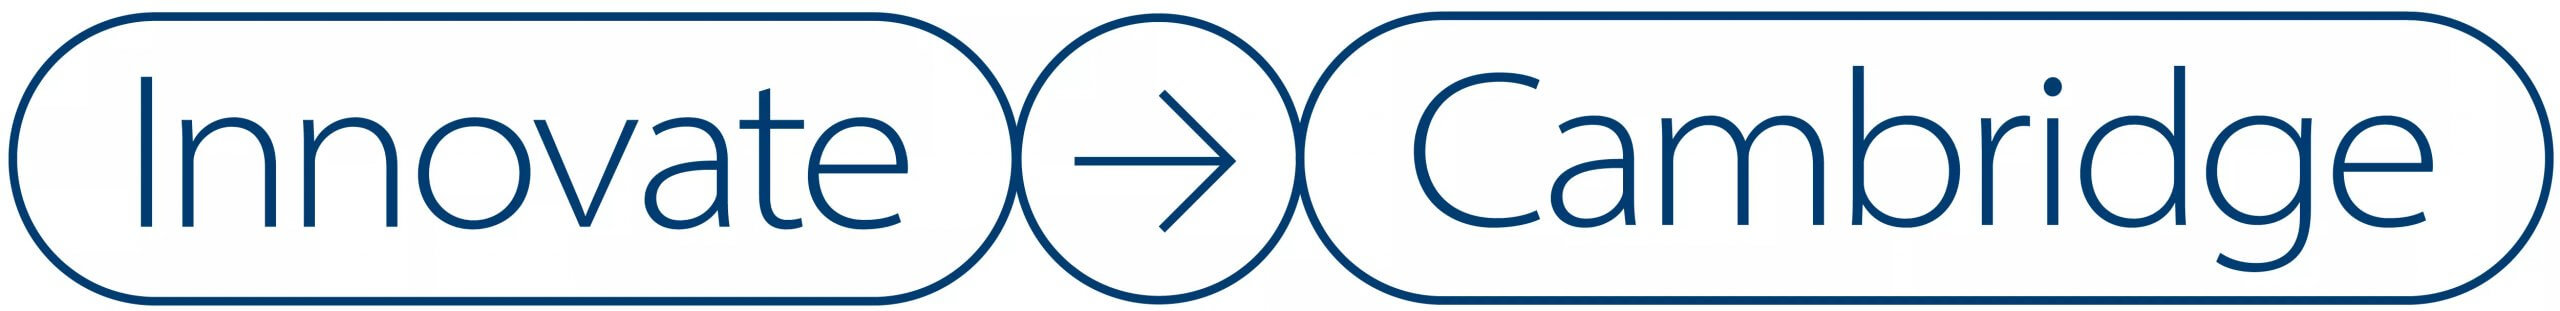 innovate cambridge logo